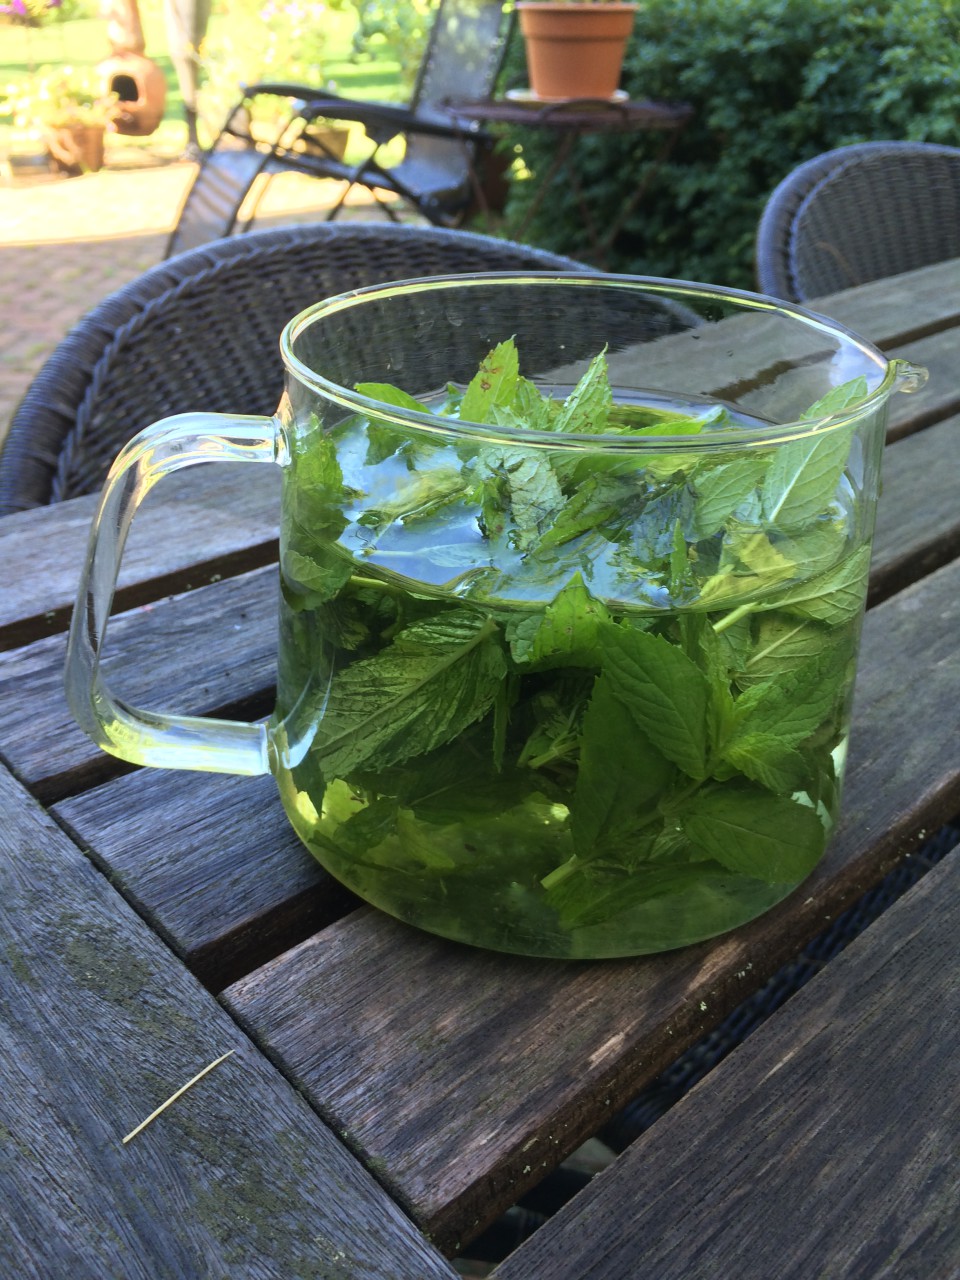 Gunst's refreshing sun tea recipe includes just mint leaves, summer sun, and time. (Kathy Gunst/WBUR)